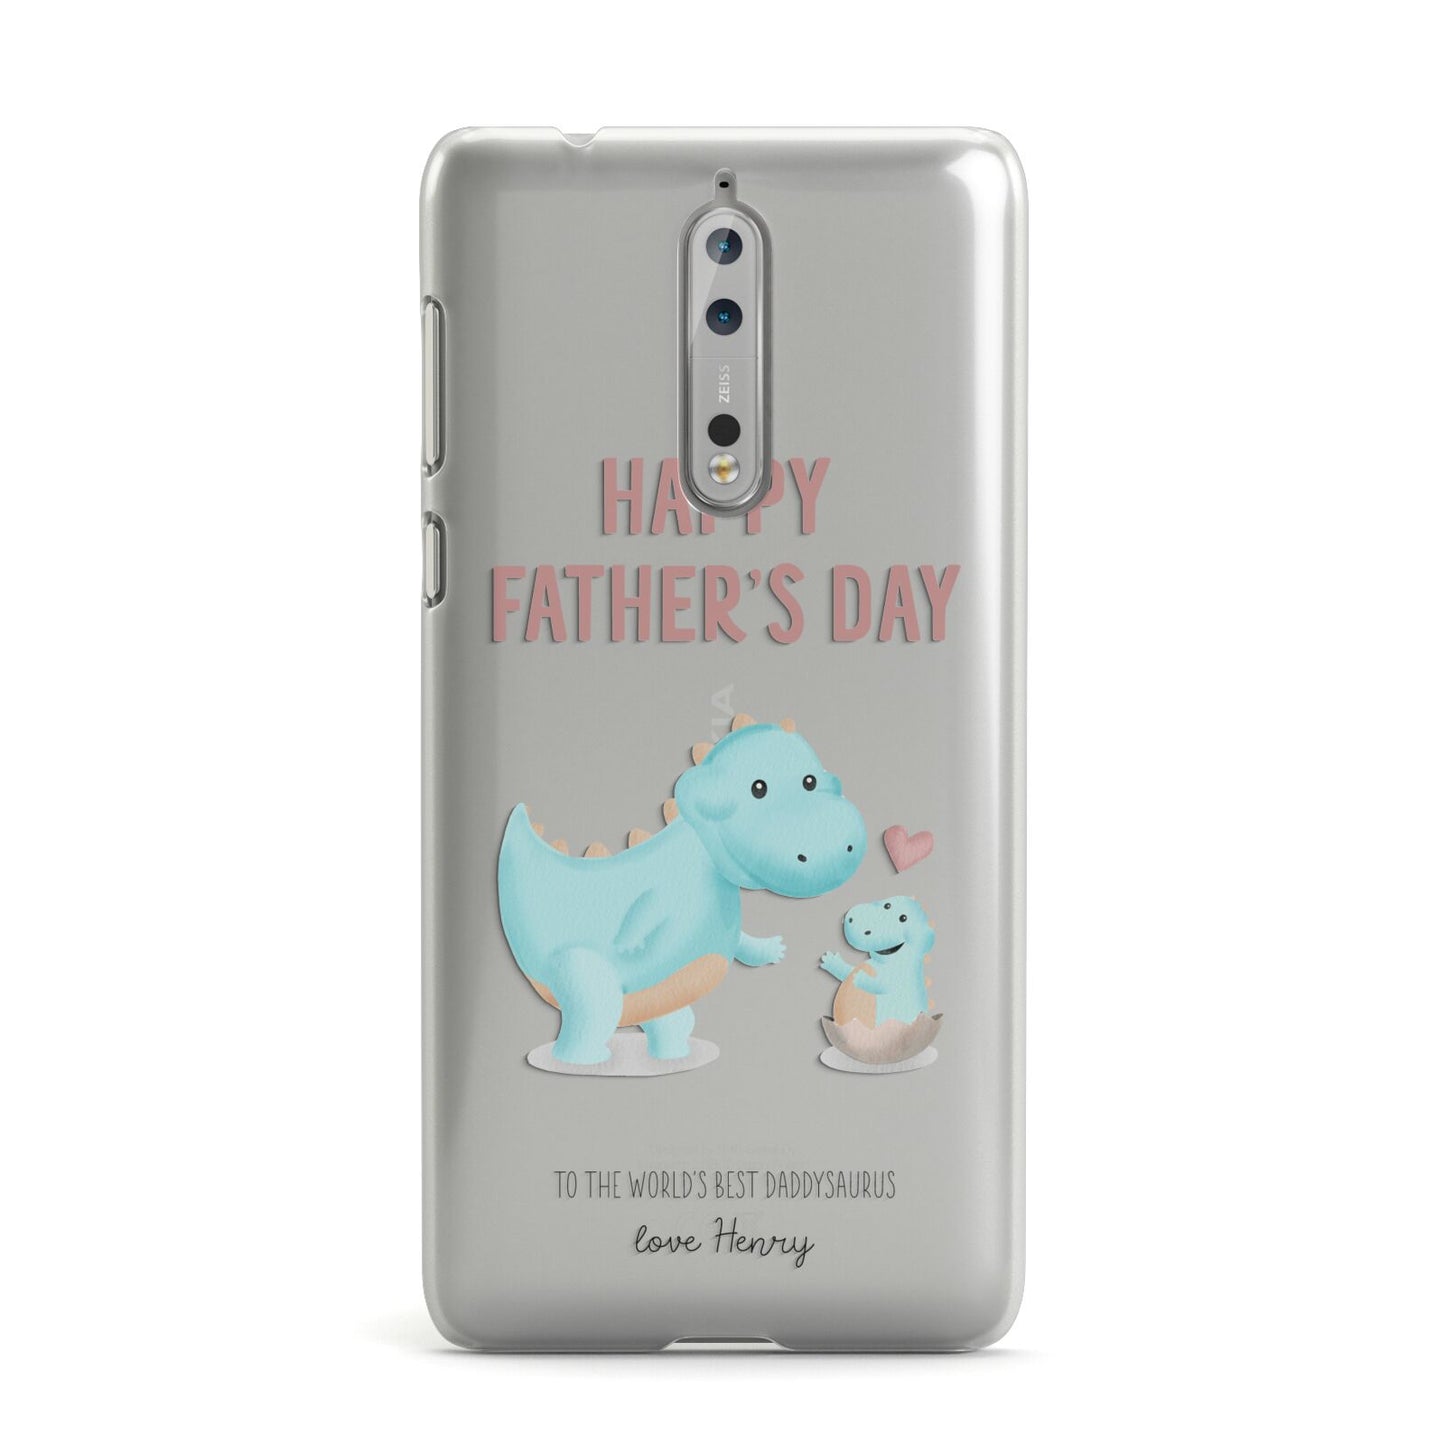 Happy Fathers Day Daddysaurus Nokia Case